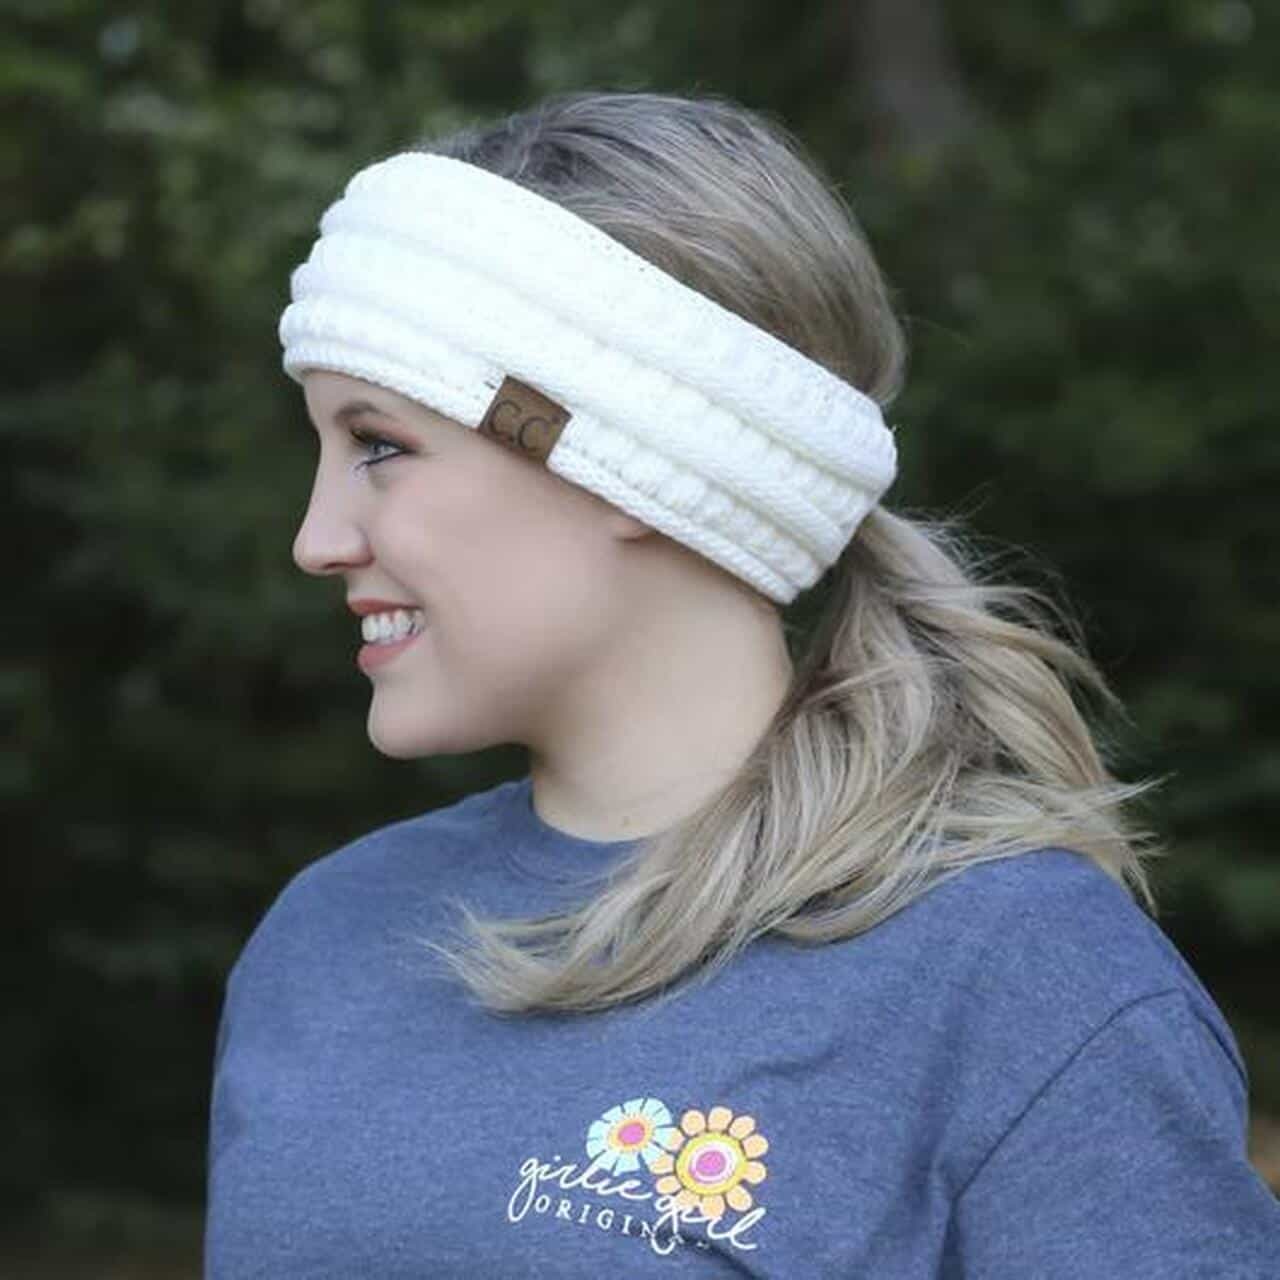 young woman wearing white knit headwrap outside